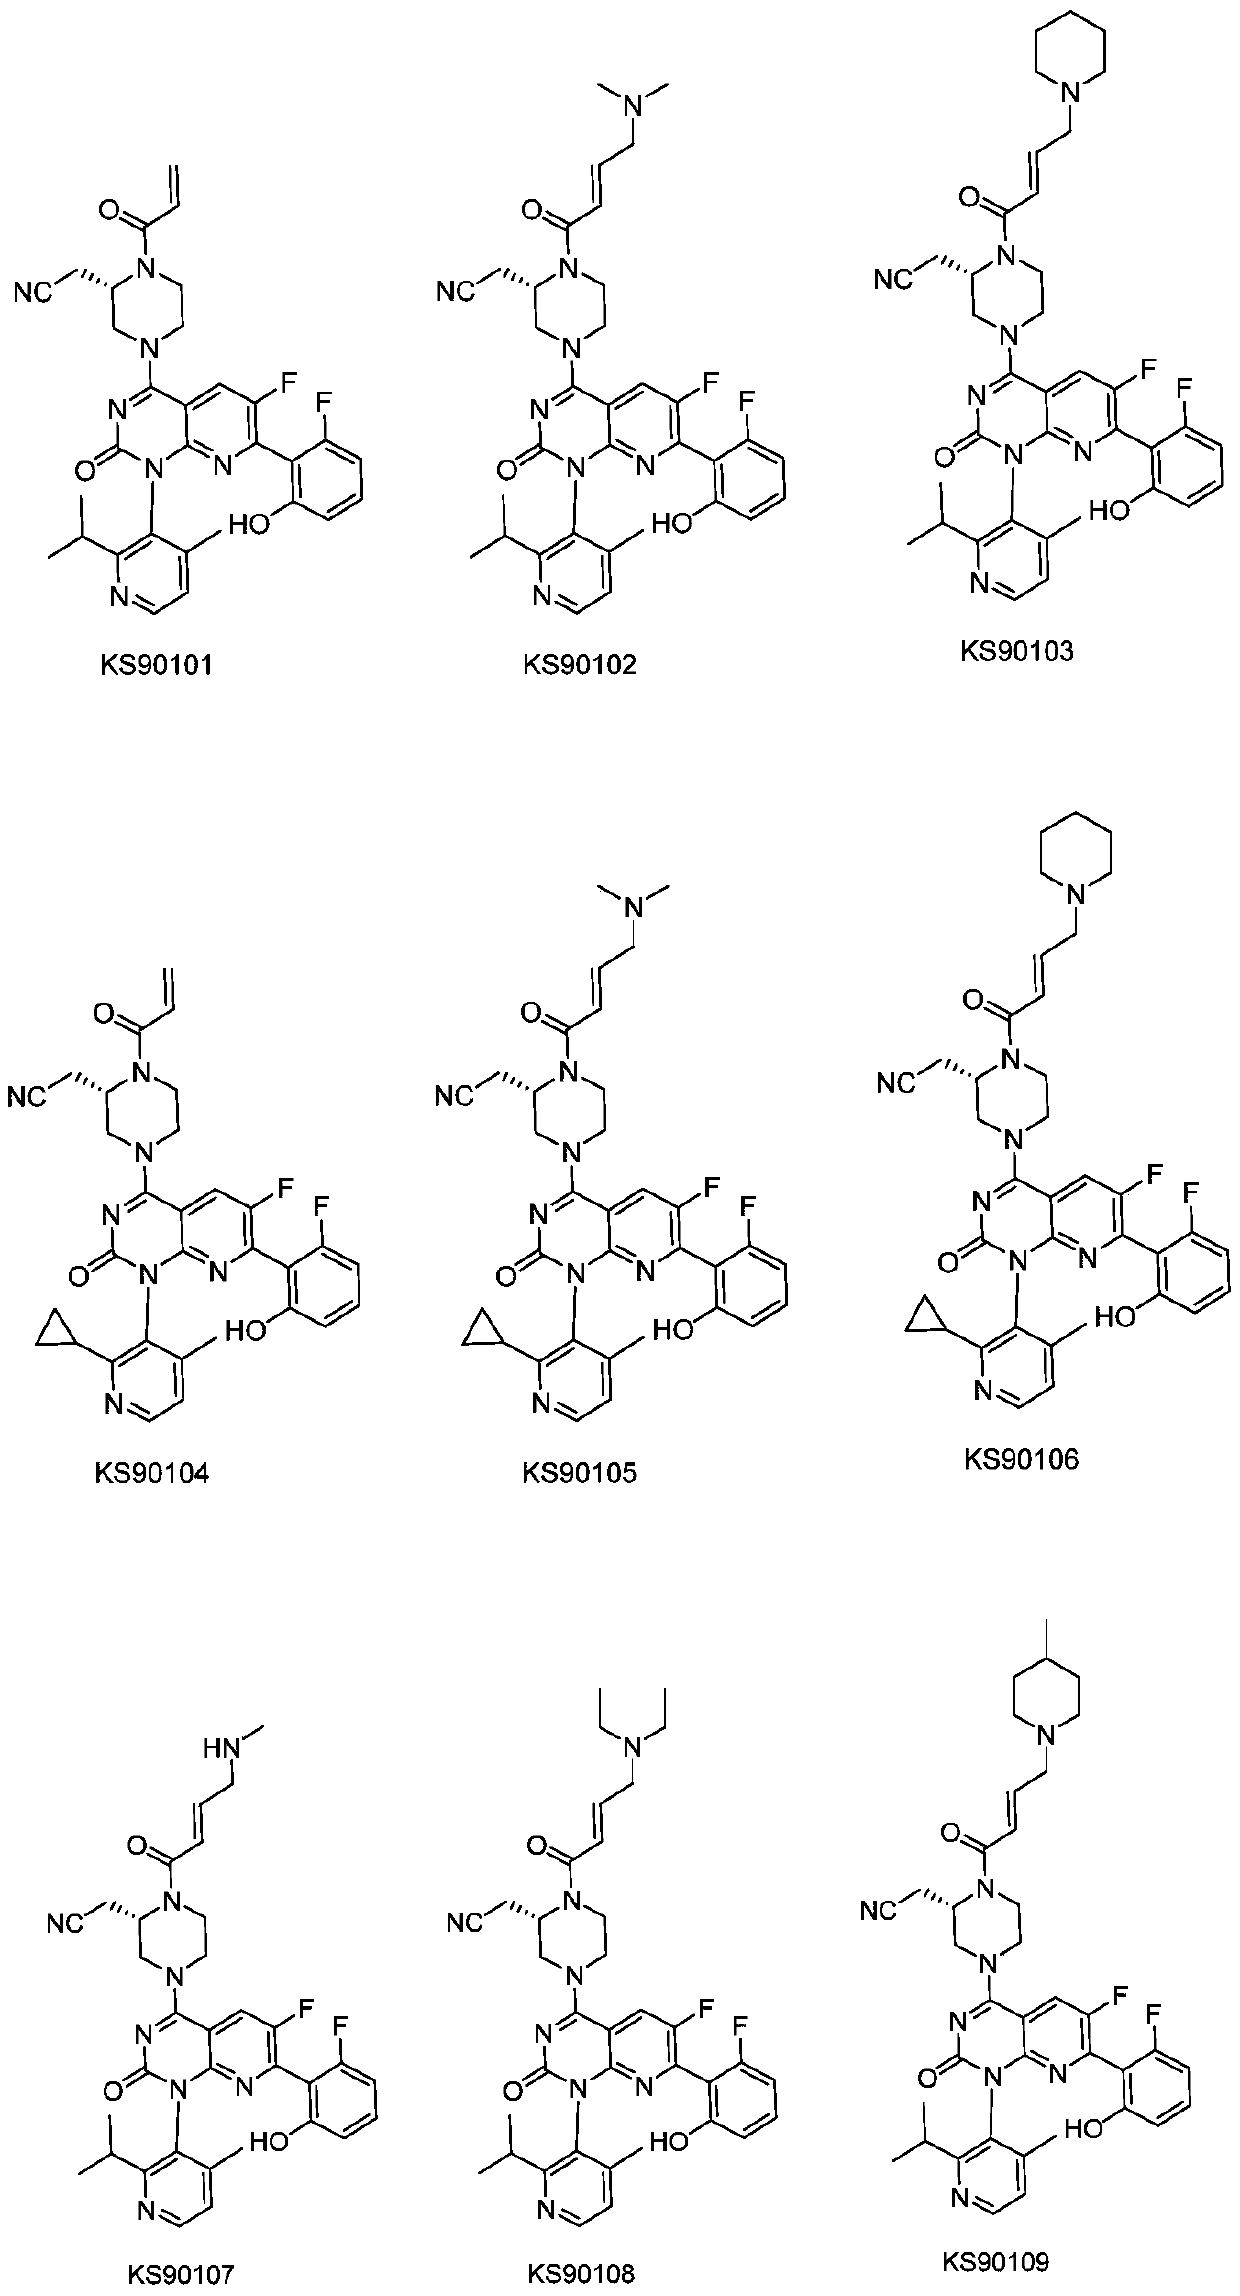 Nitrile methyl piperazine derivative serving as KRAS G12C mutant protein inhibitor and application of nitrile methyl piperazine derivative